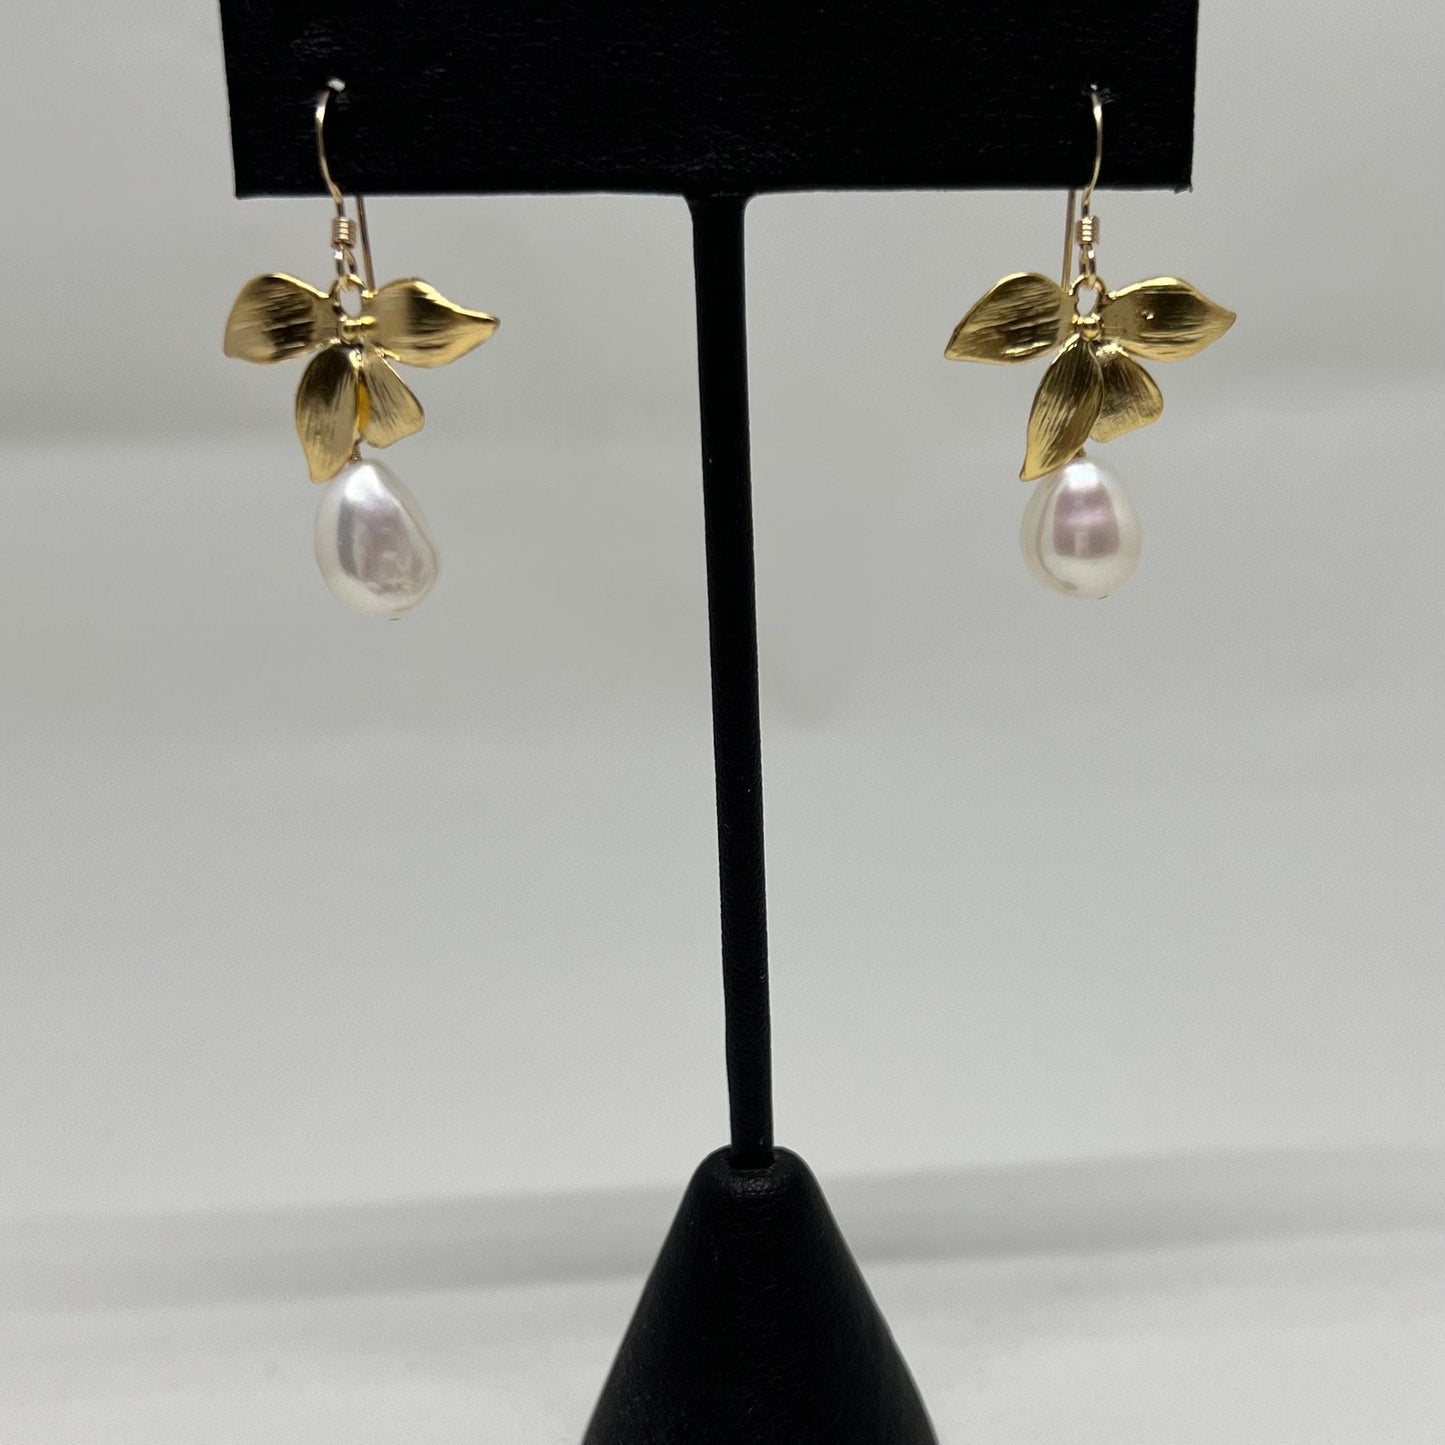 Flower pearl earrings